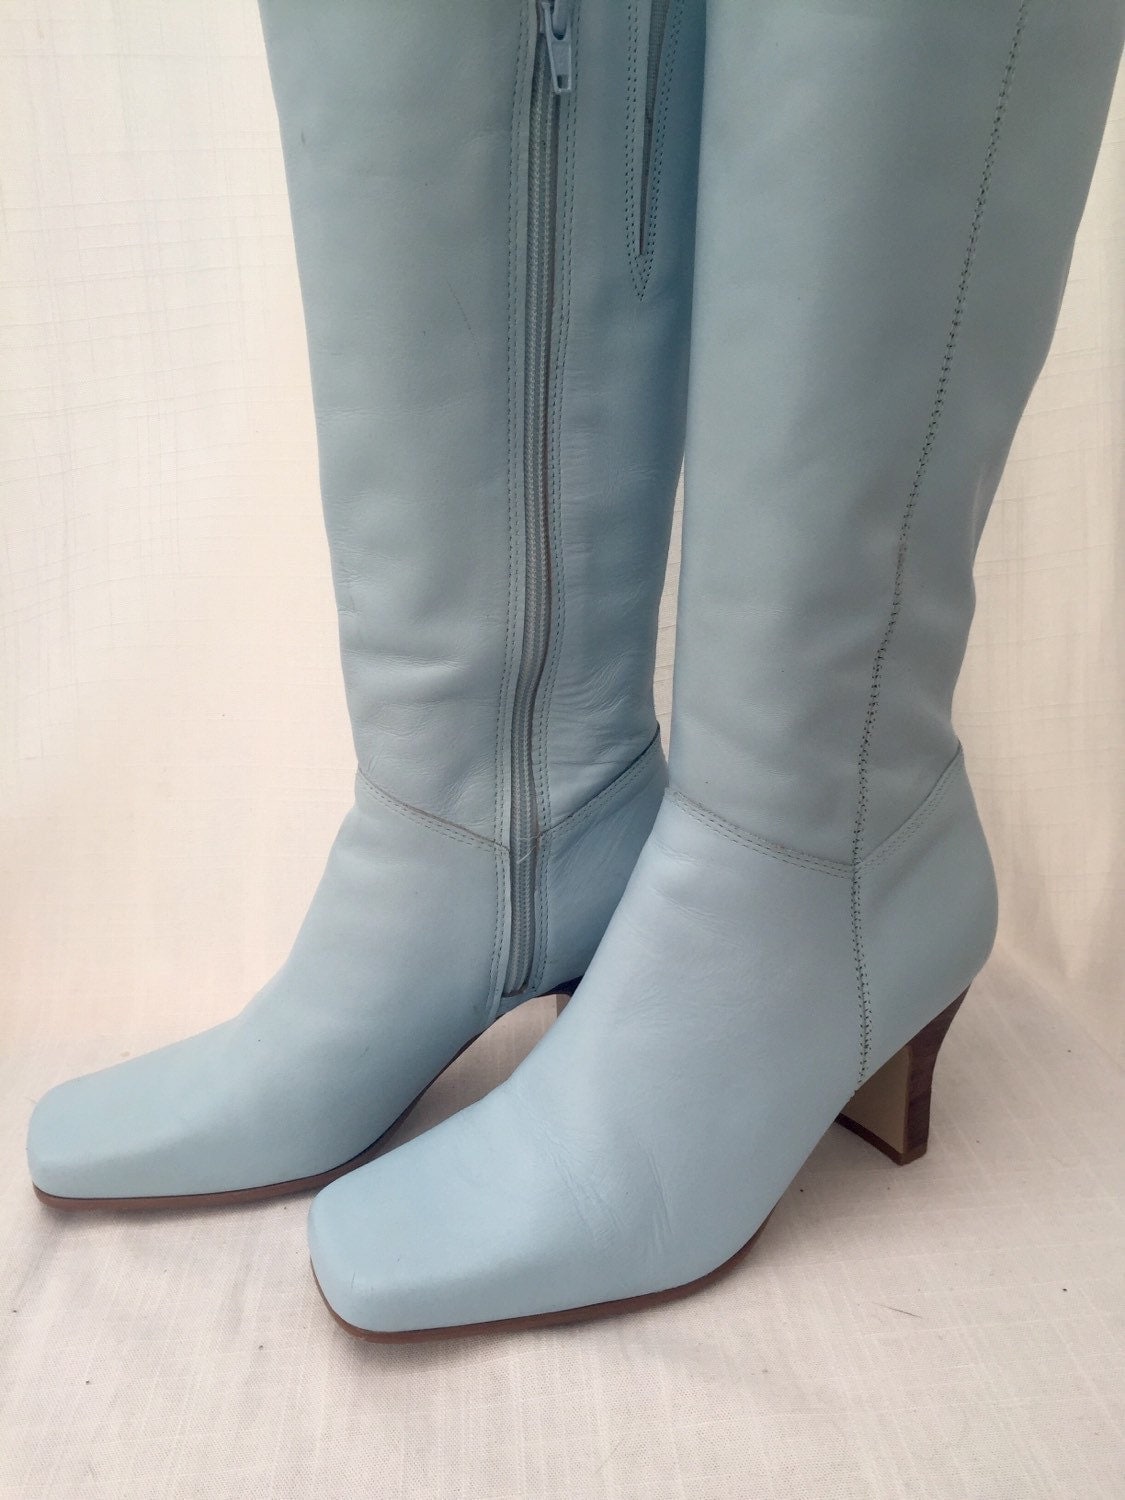 SALE FAITH Vintage Mid Heel Light Blue Leather Boots Size 38